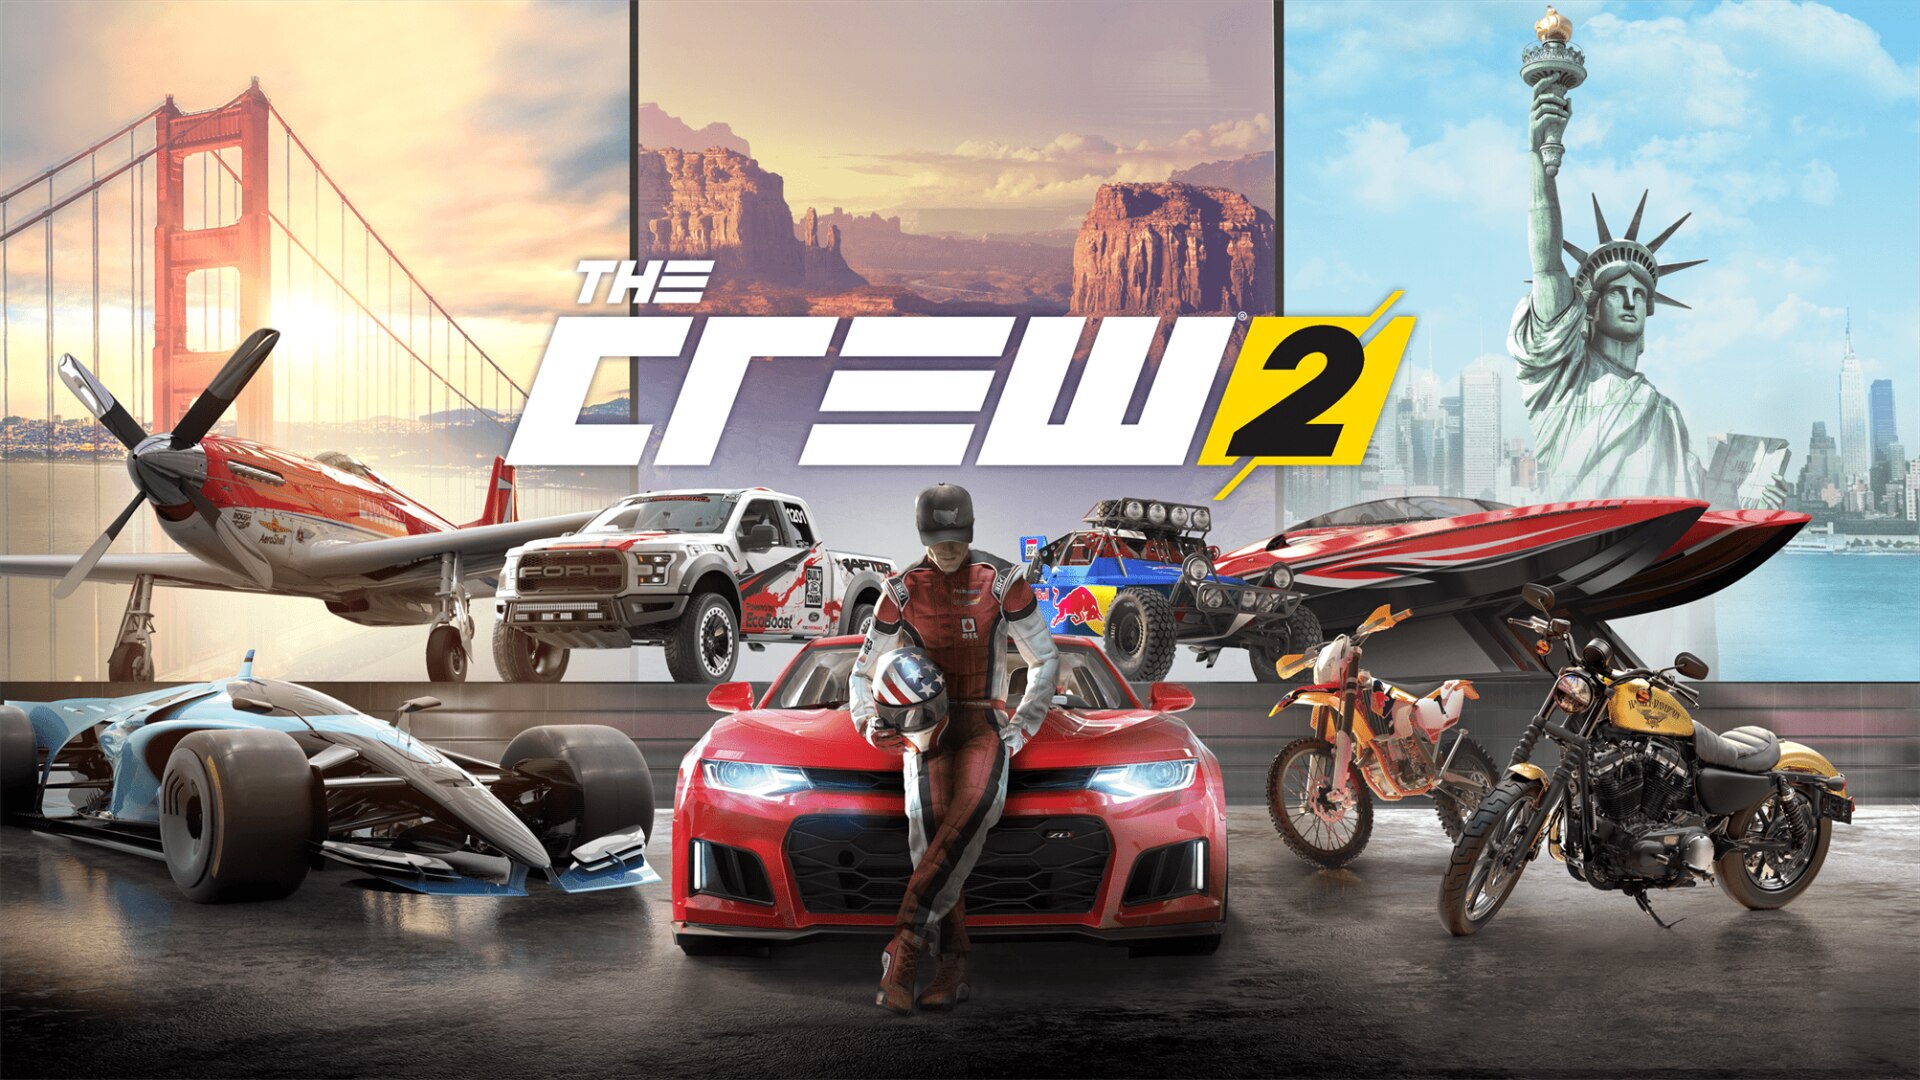 The Crew 2 cover art